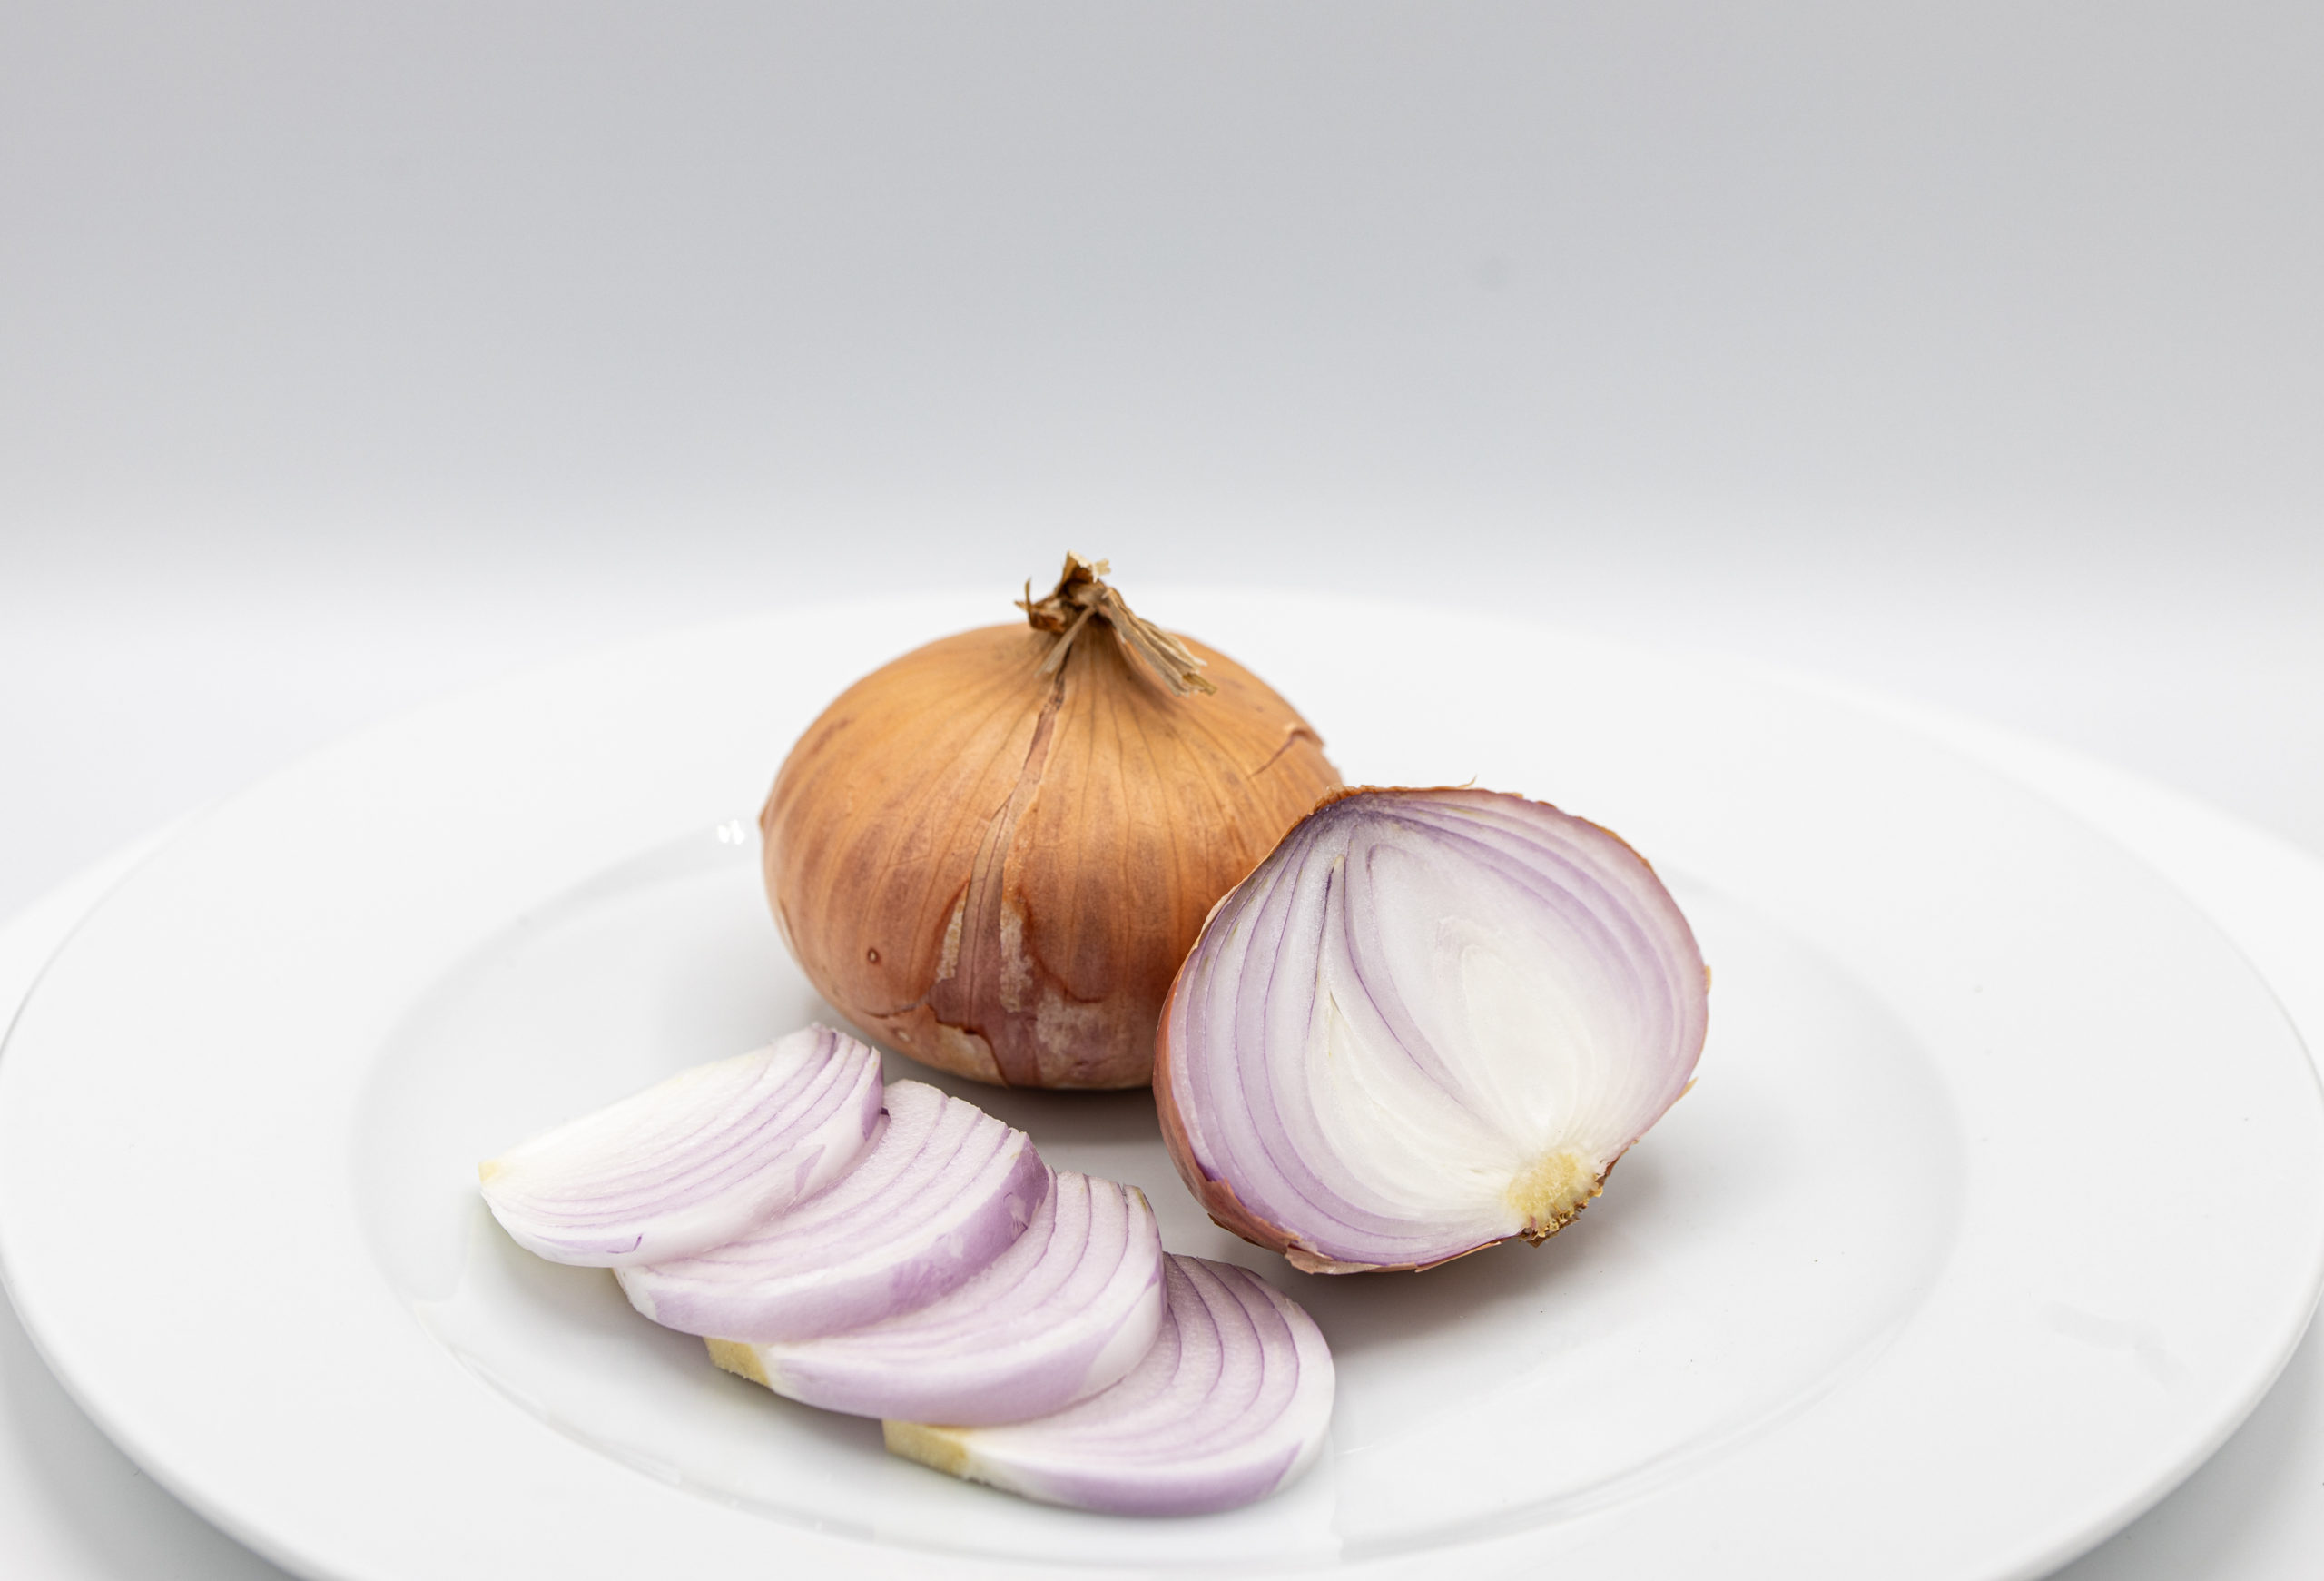 emporda Product- Figueres onion - Empordaturisme 